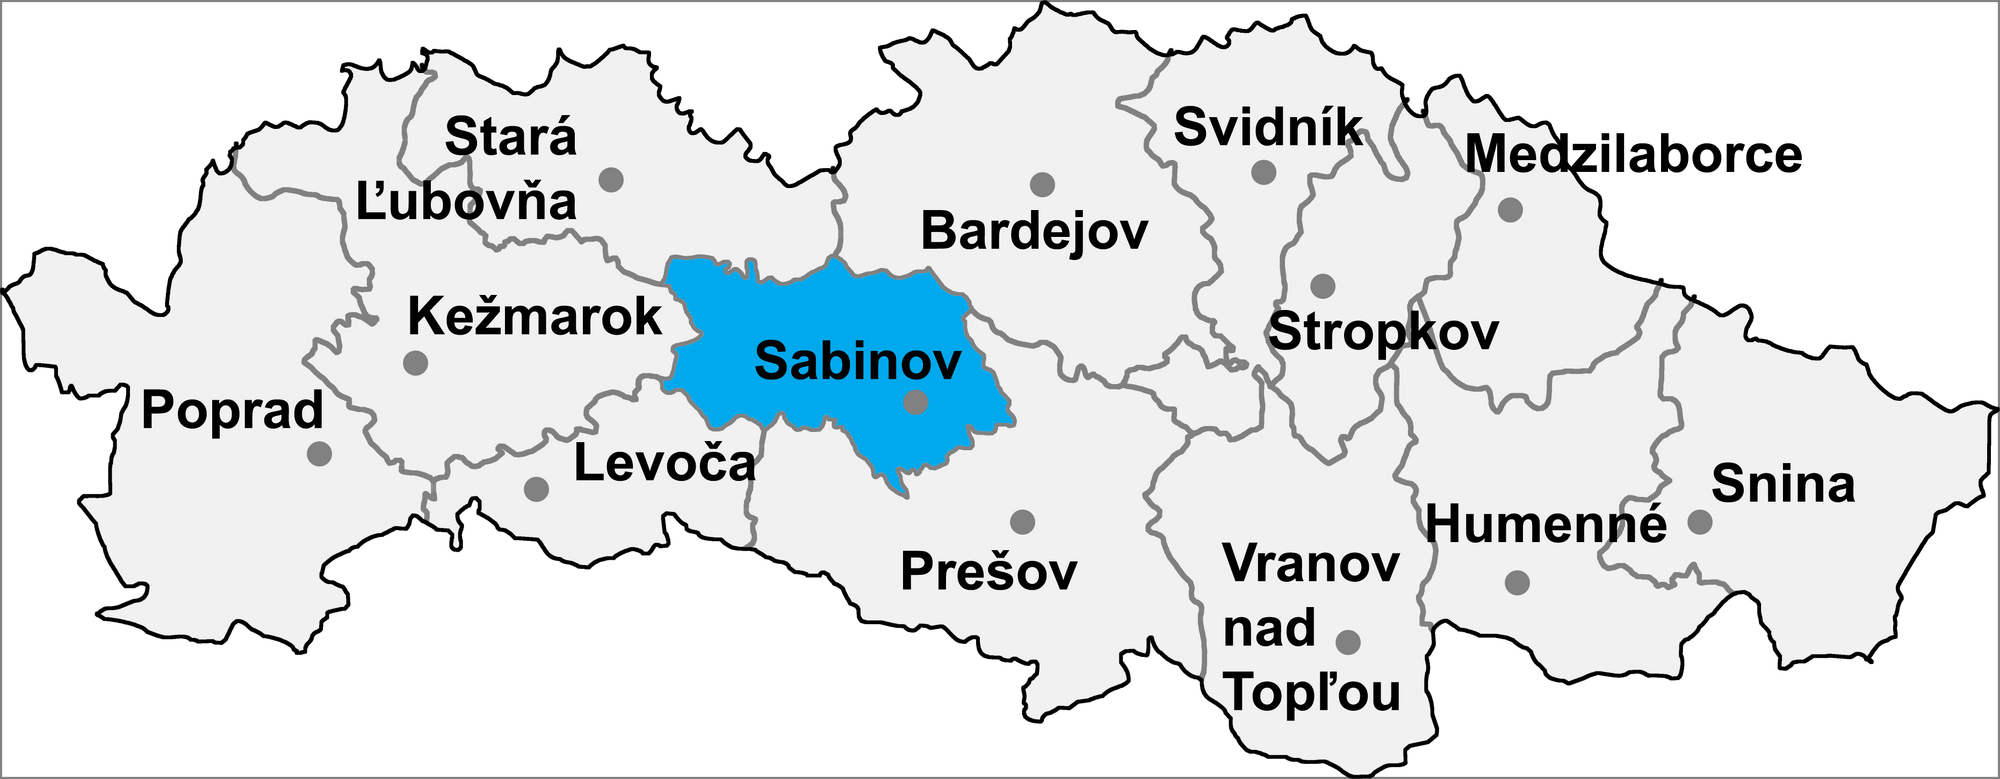 Bildergebnis für presov sabinov slowakei landkarte